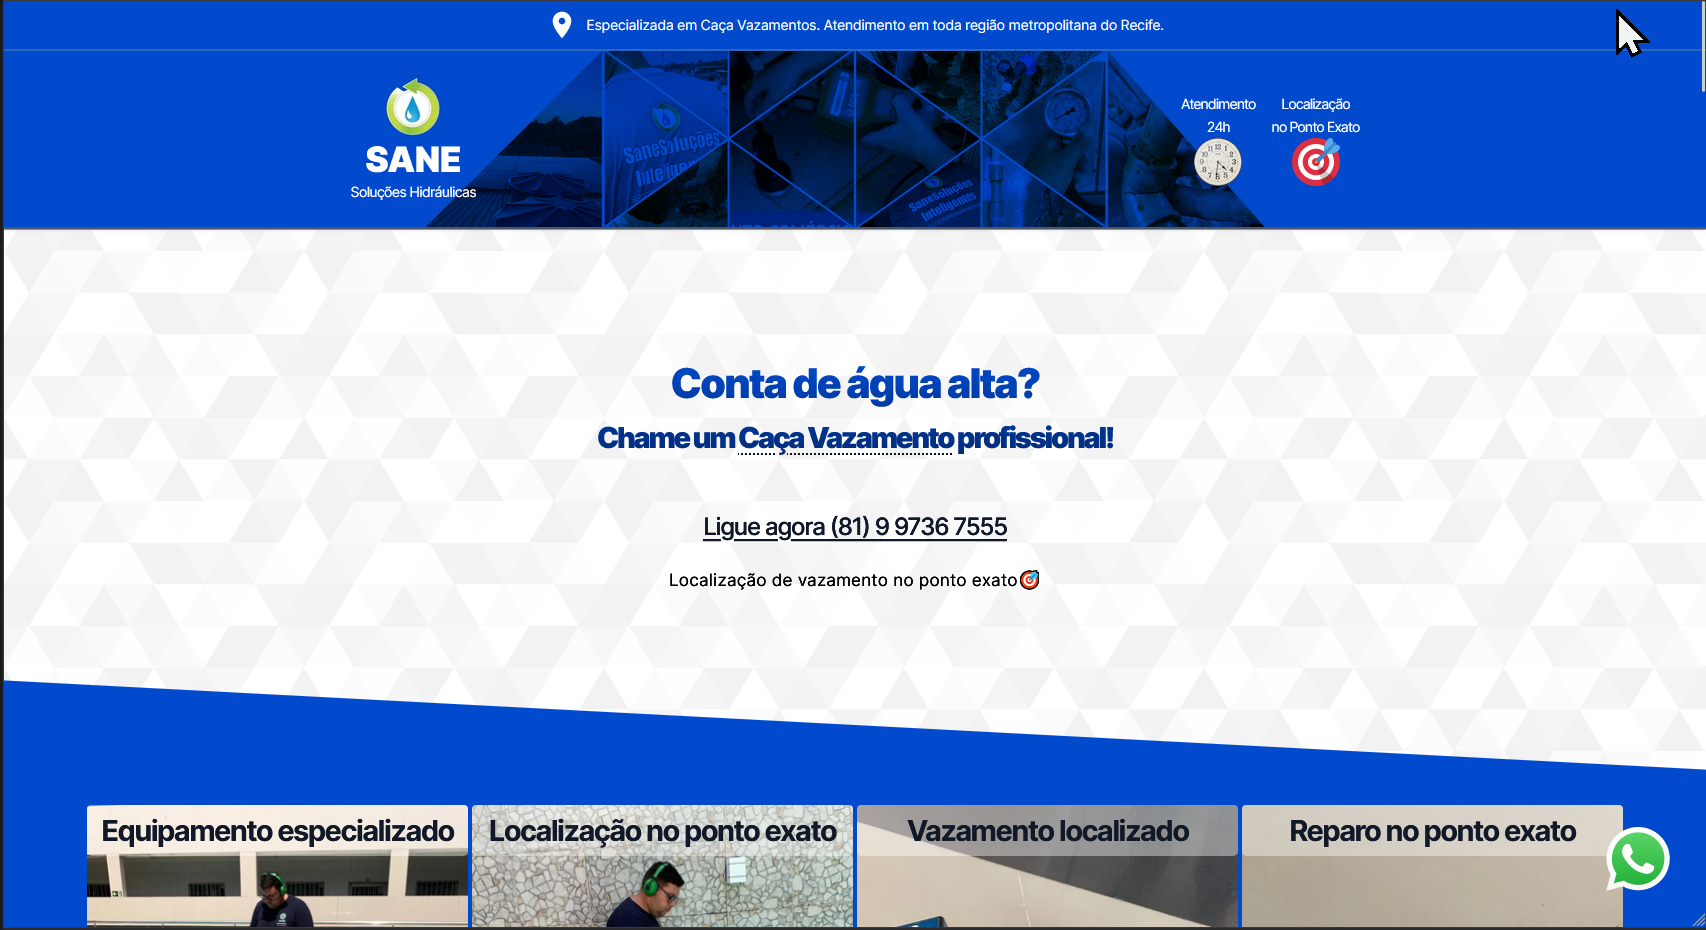 Sane website mobile